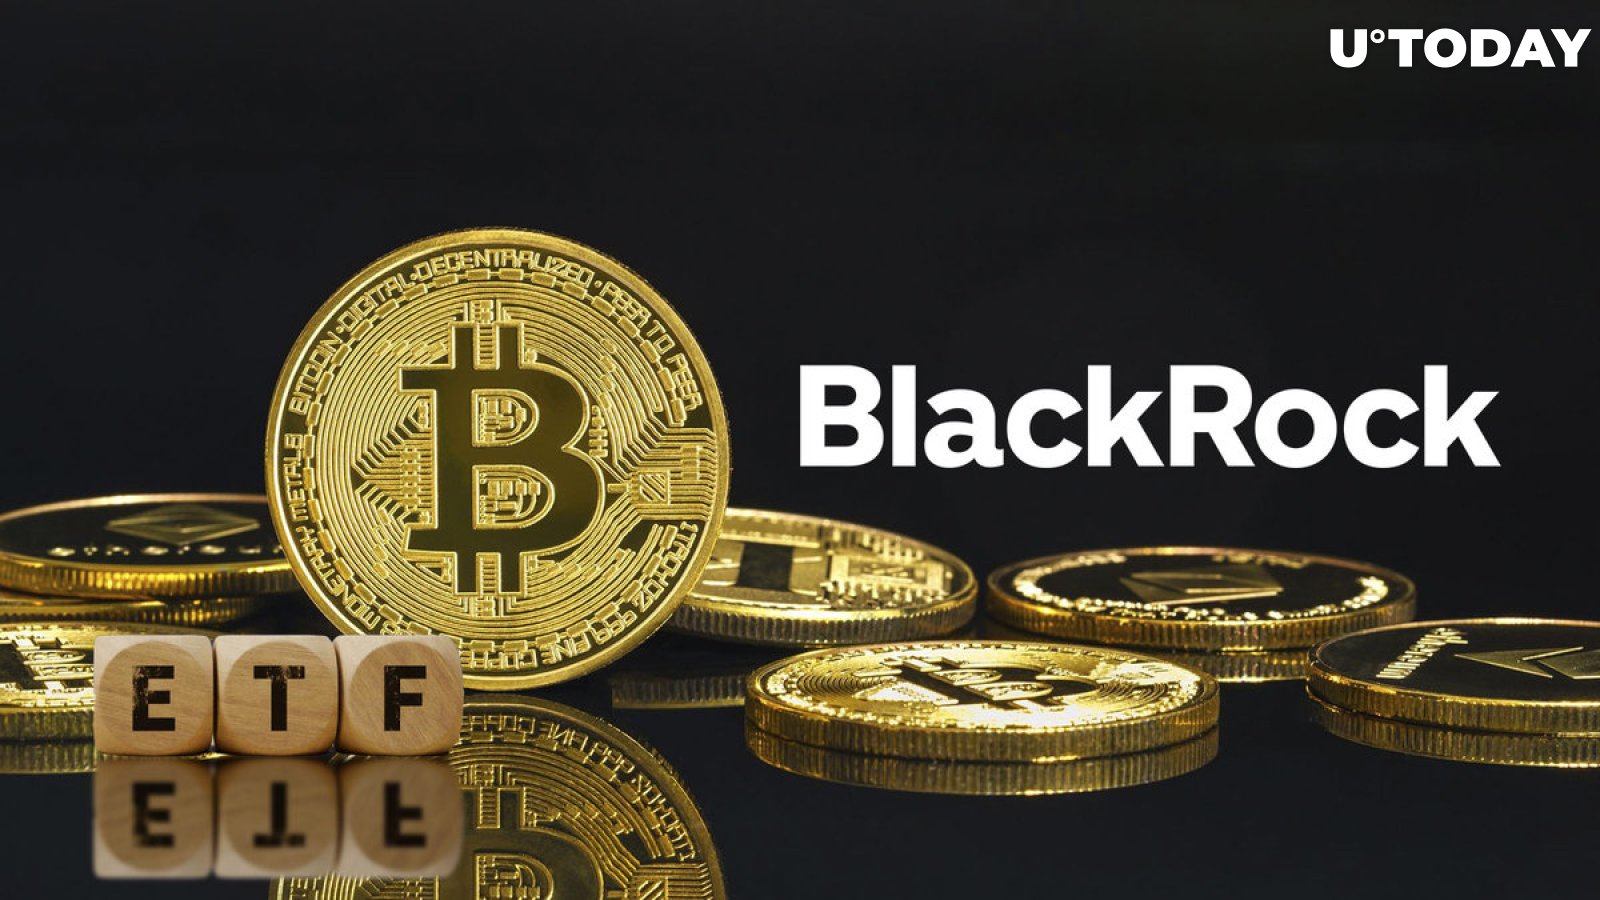 BlackRock's Bitcoin ETF Records $192 Million Worth of Inflows